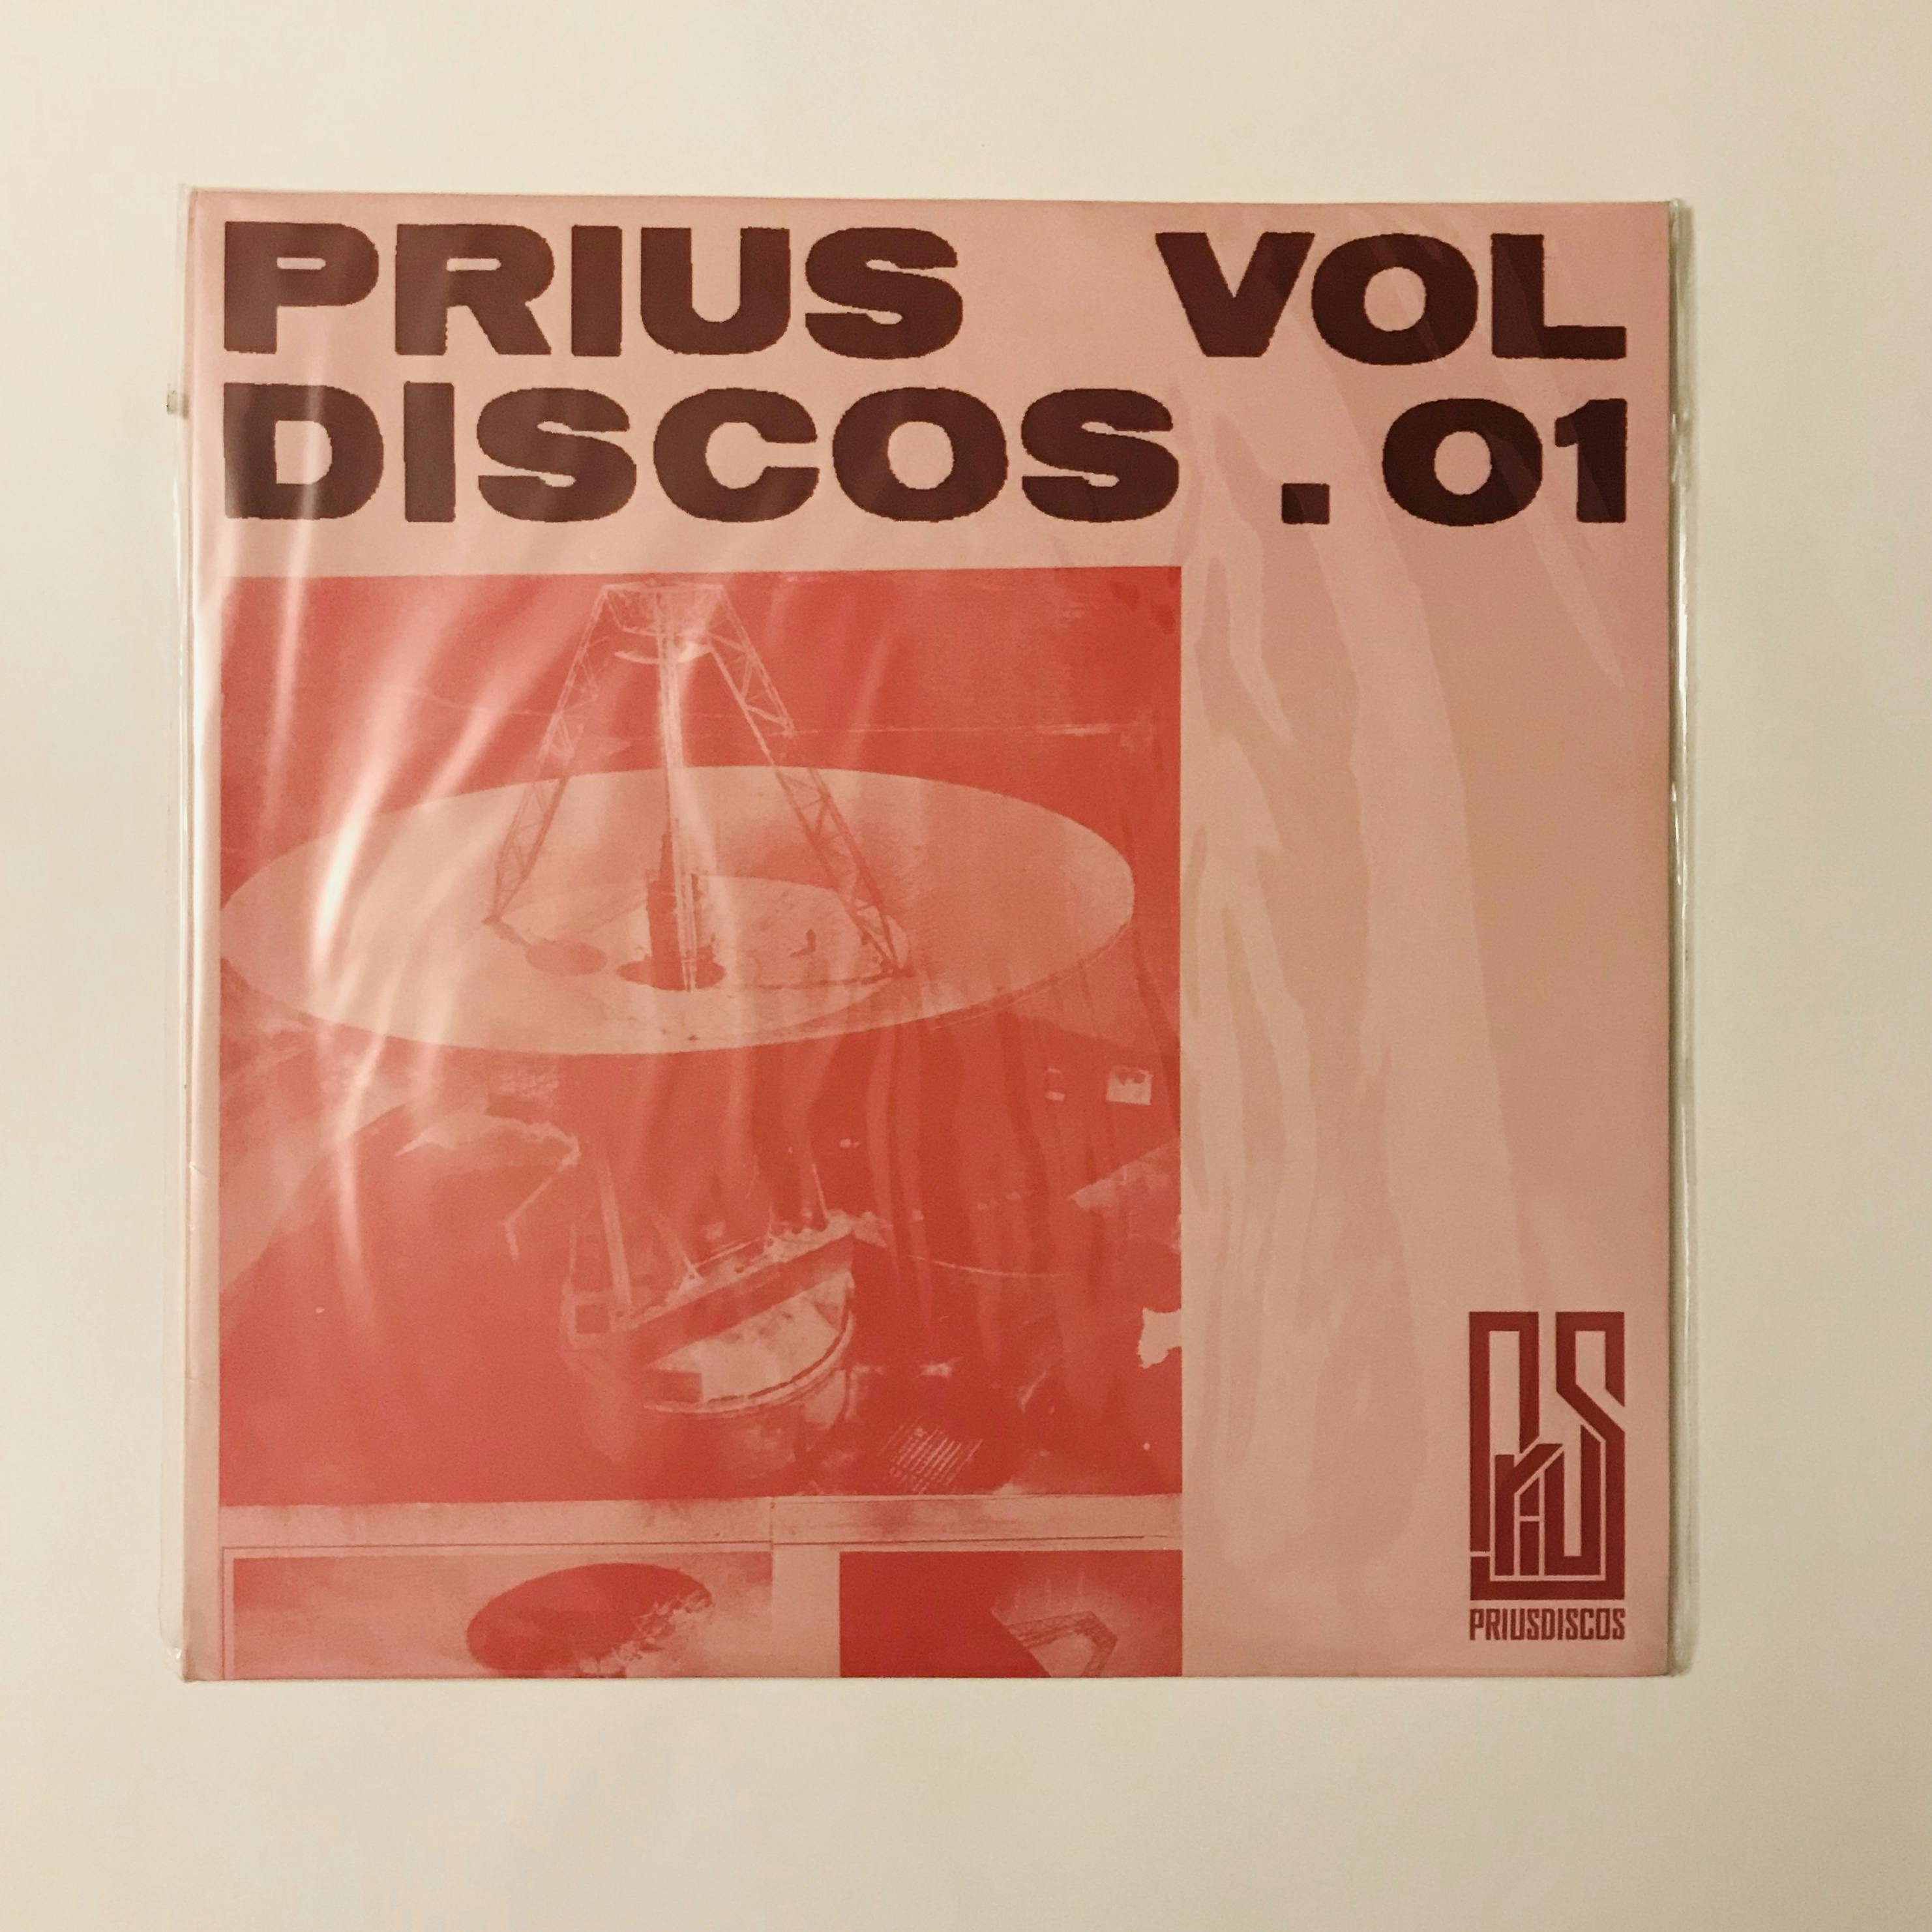 "PRIUSDISCOS VOL. 01", LP